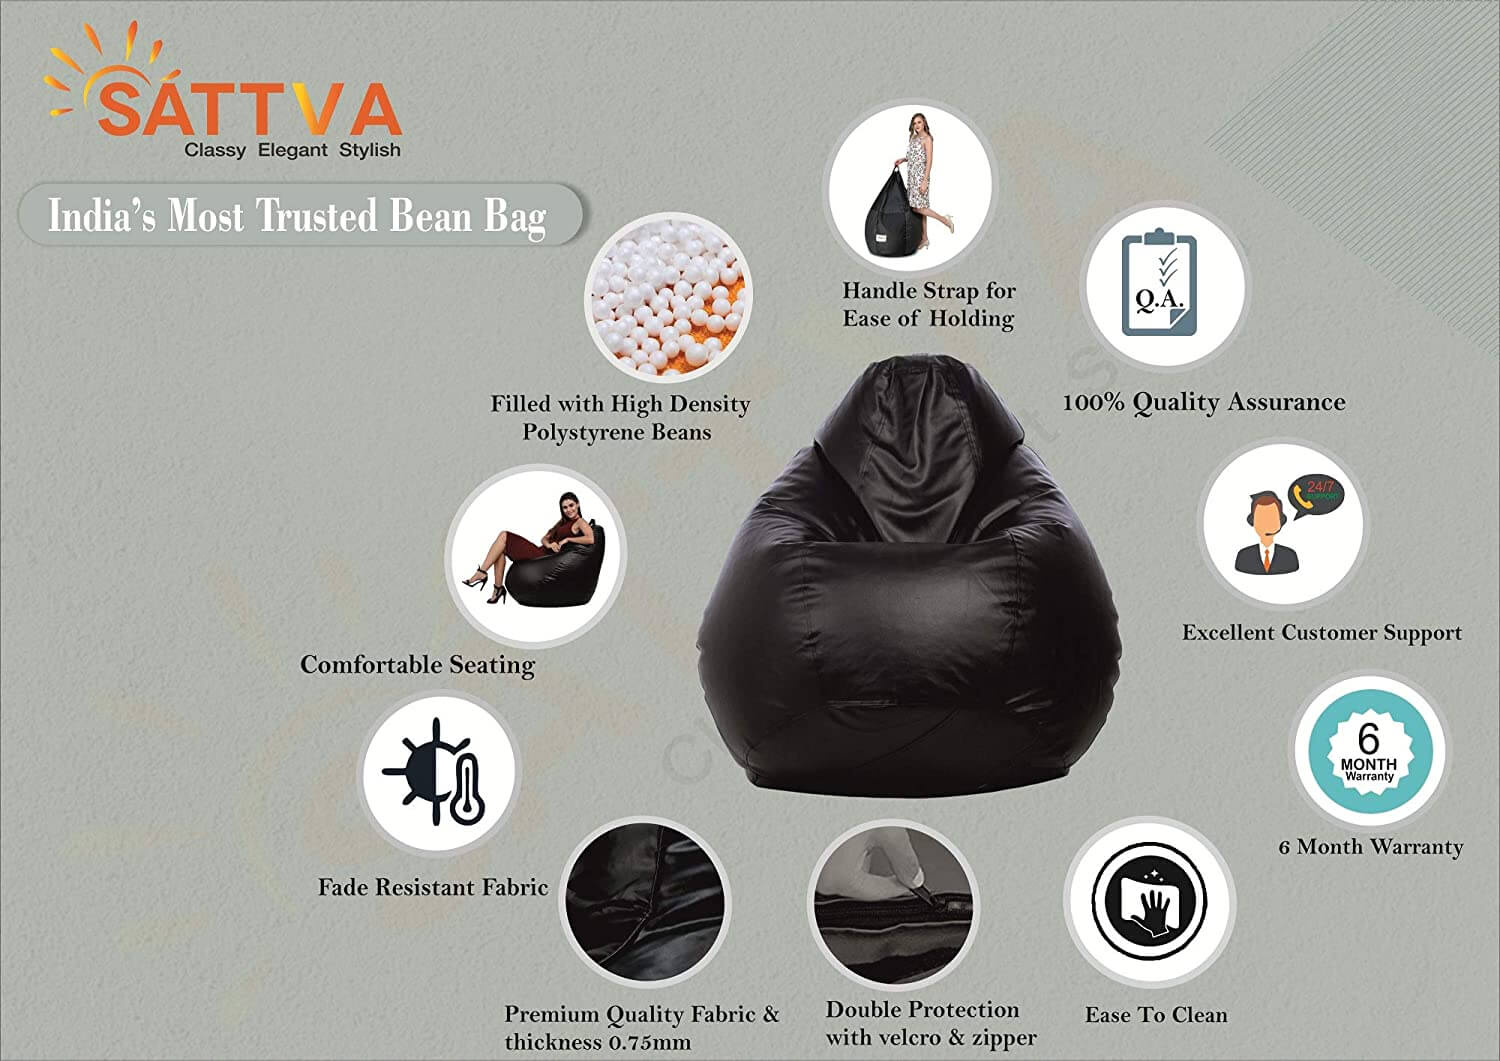 Buy 2.5 Kg Bean Bag Refill at 28% OFF by Sattva